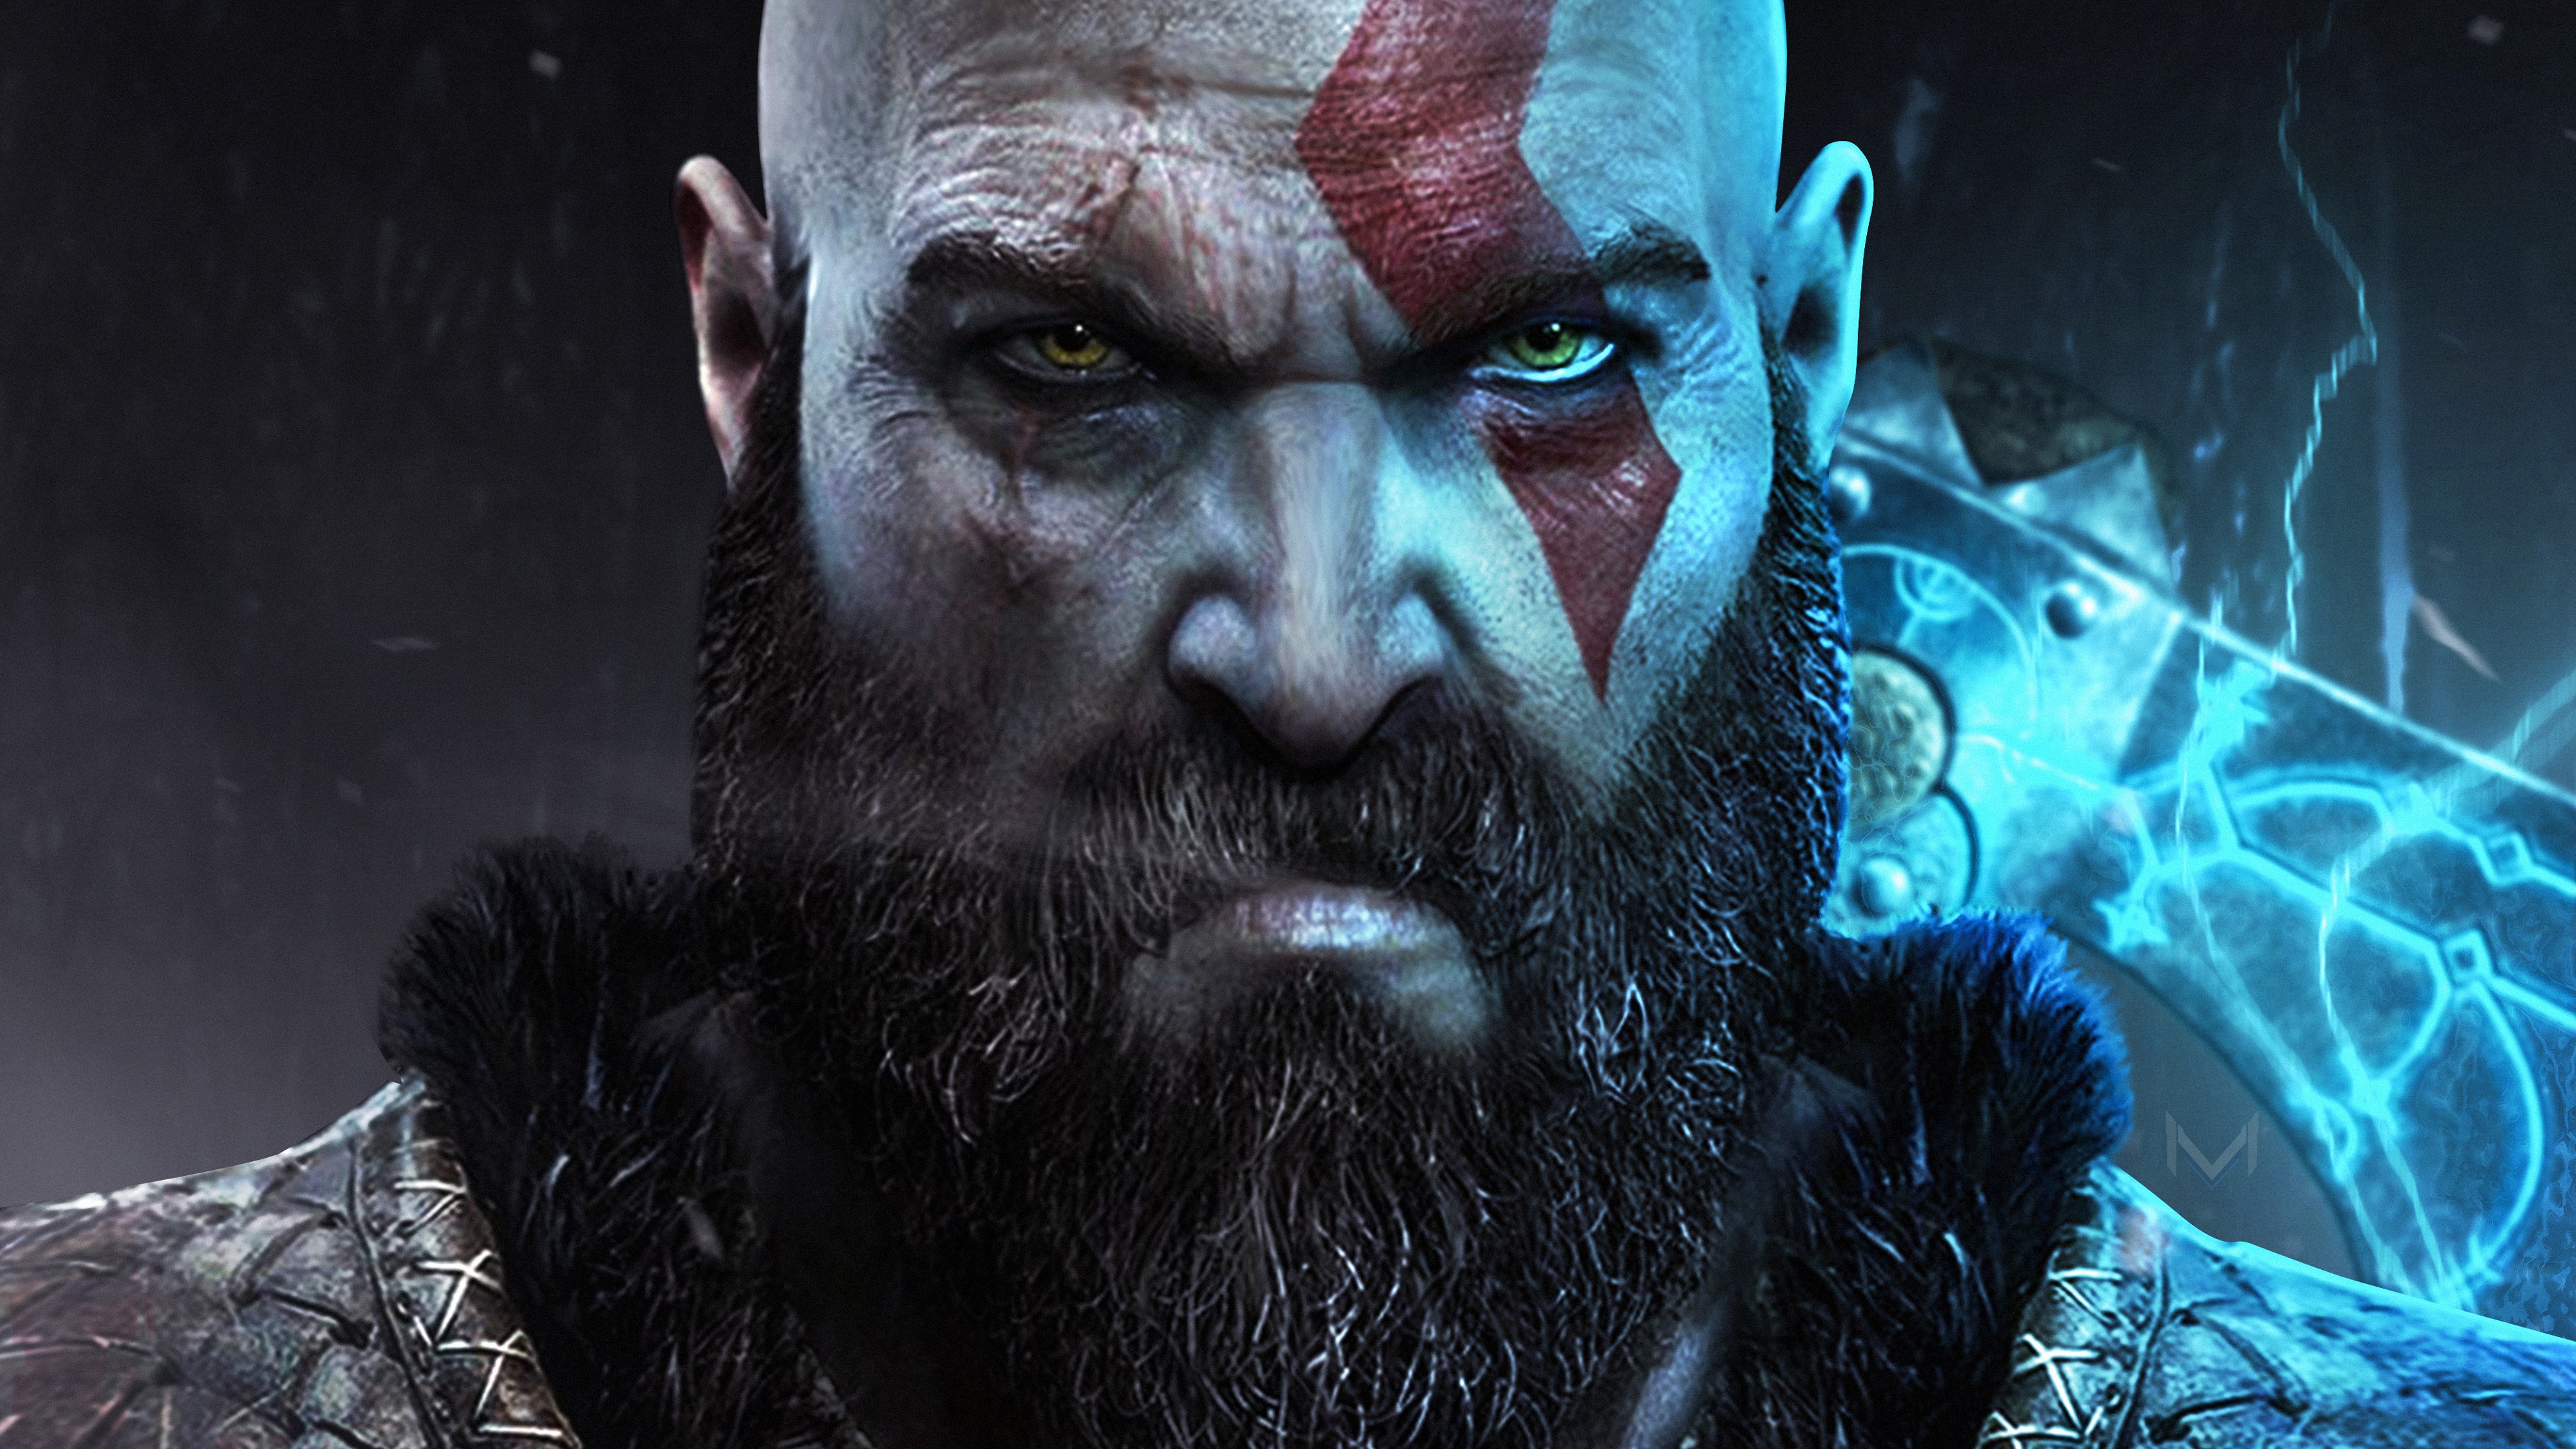 kratos wallpaper,beard,facial hair,human,eye,organism